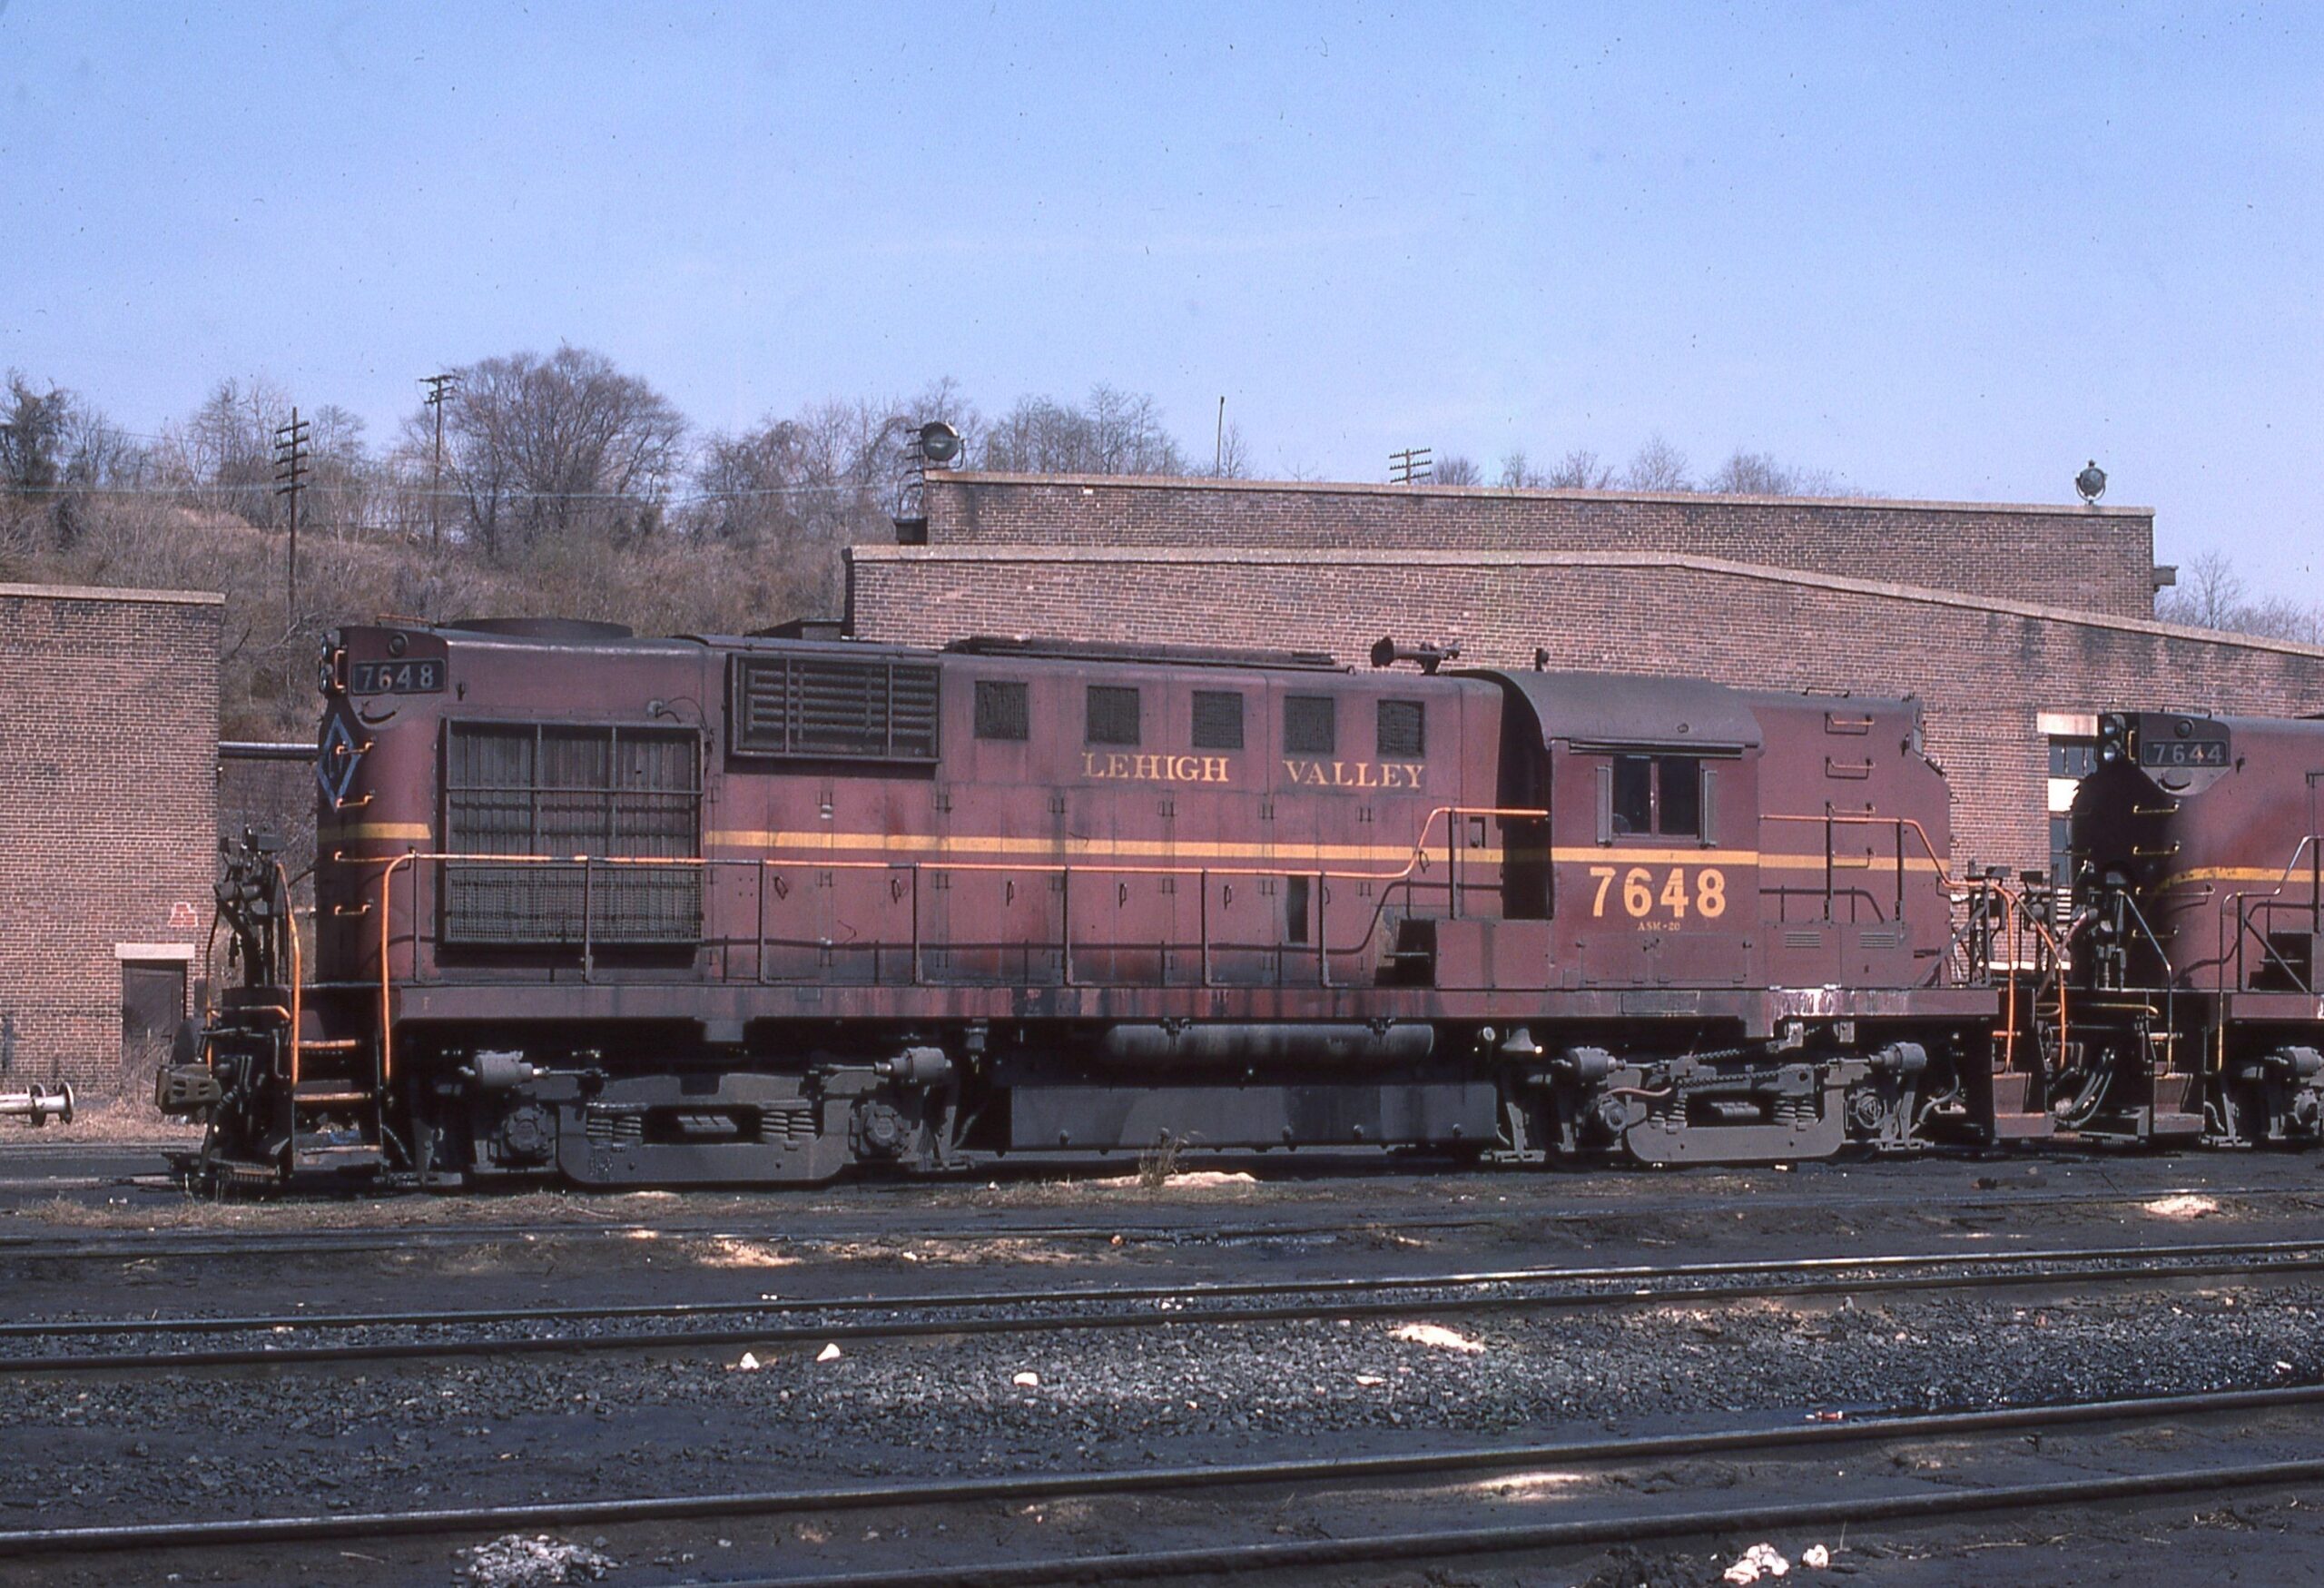 Lehigh Valley | Bethlehem, Pennsylvania | Alco RS11 #7648 diesel-electric locomotive | March 20, 1976 | Bill Brennan photograph | Morning Sun Books Collection